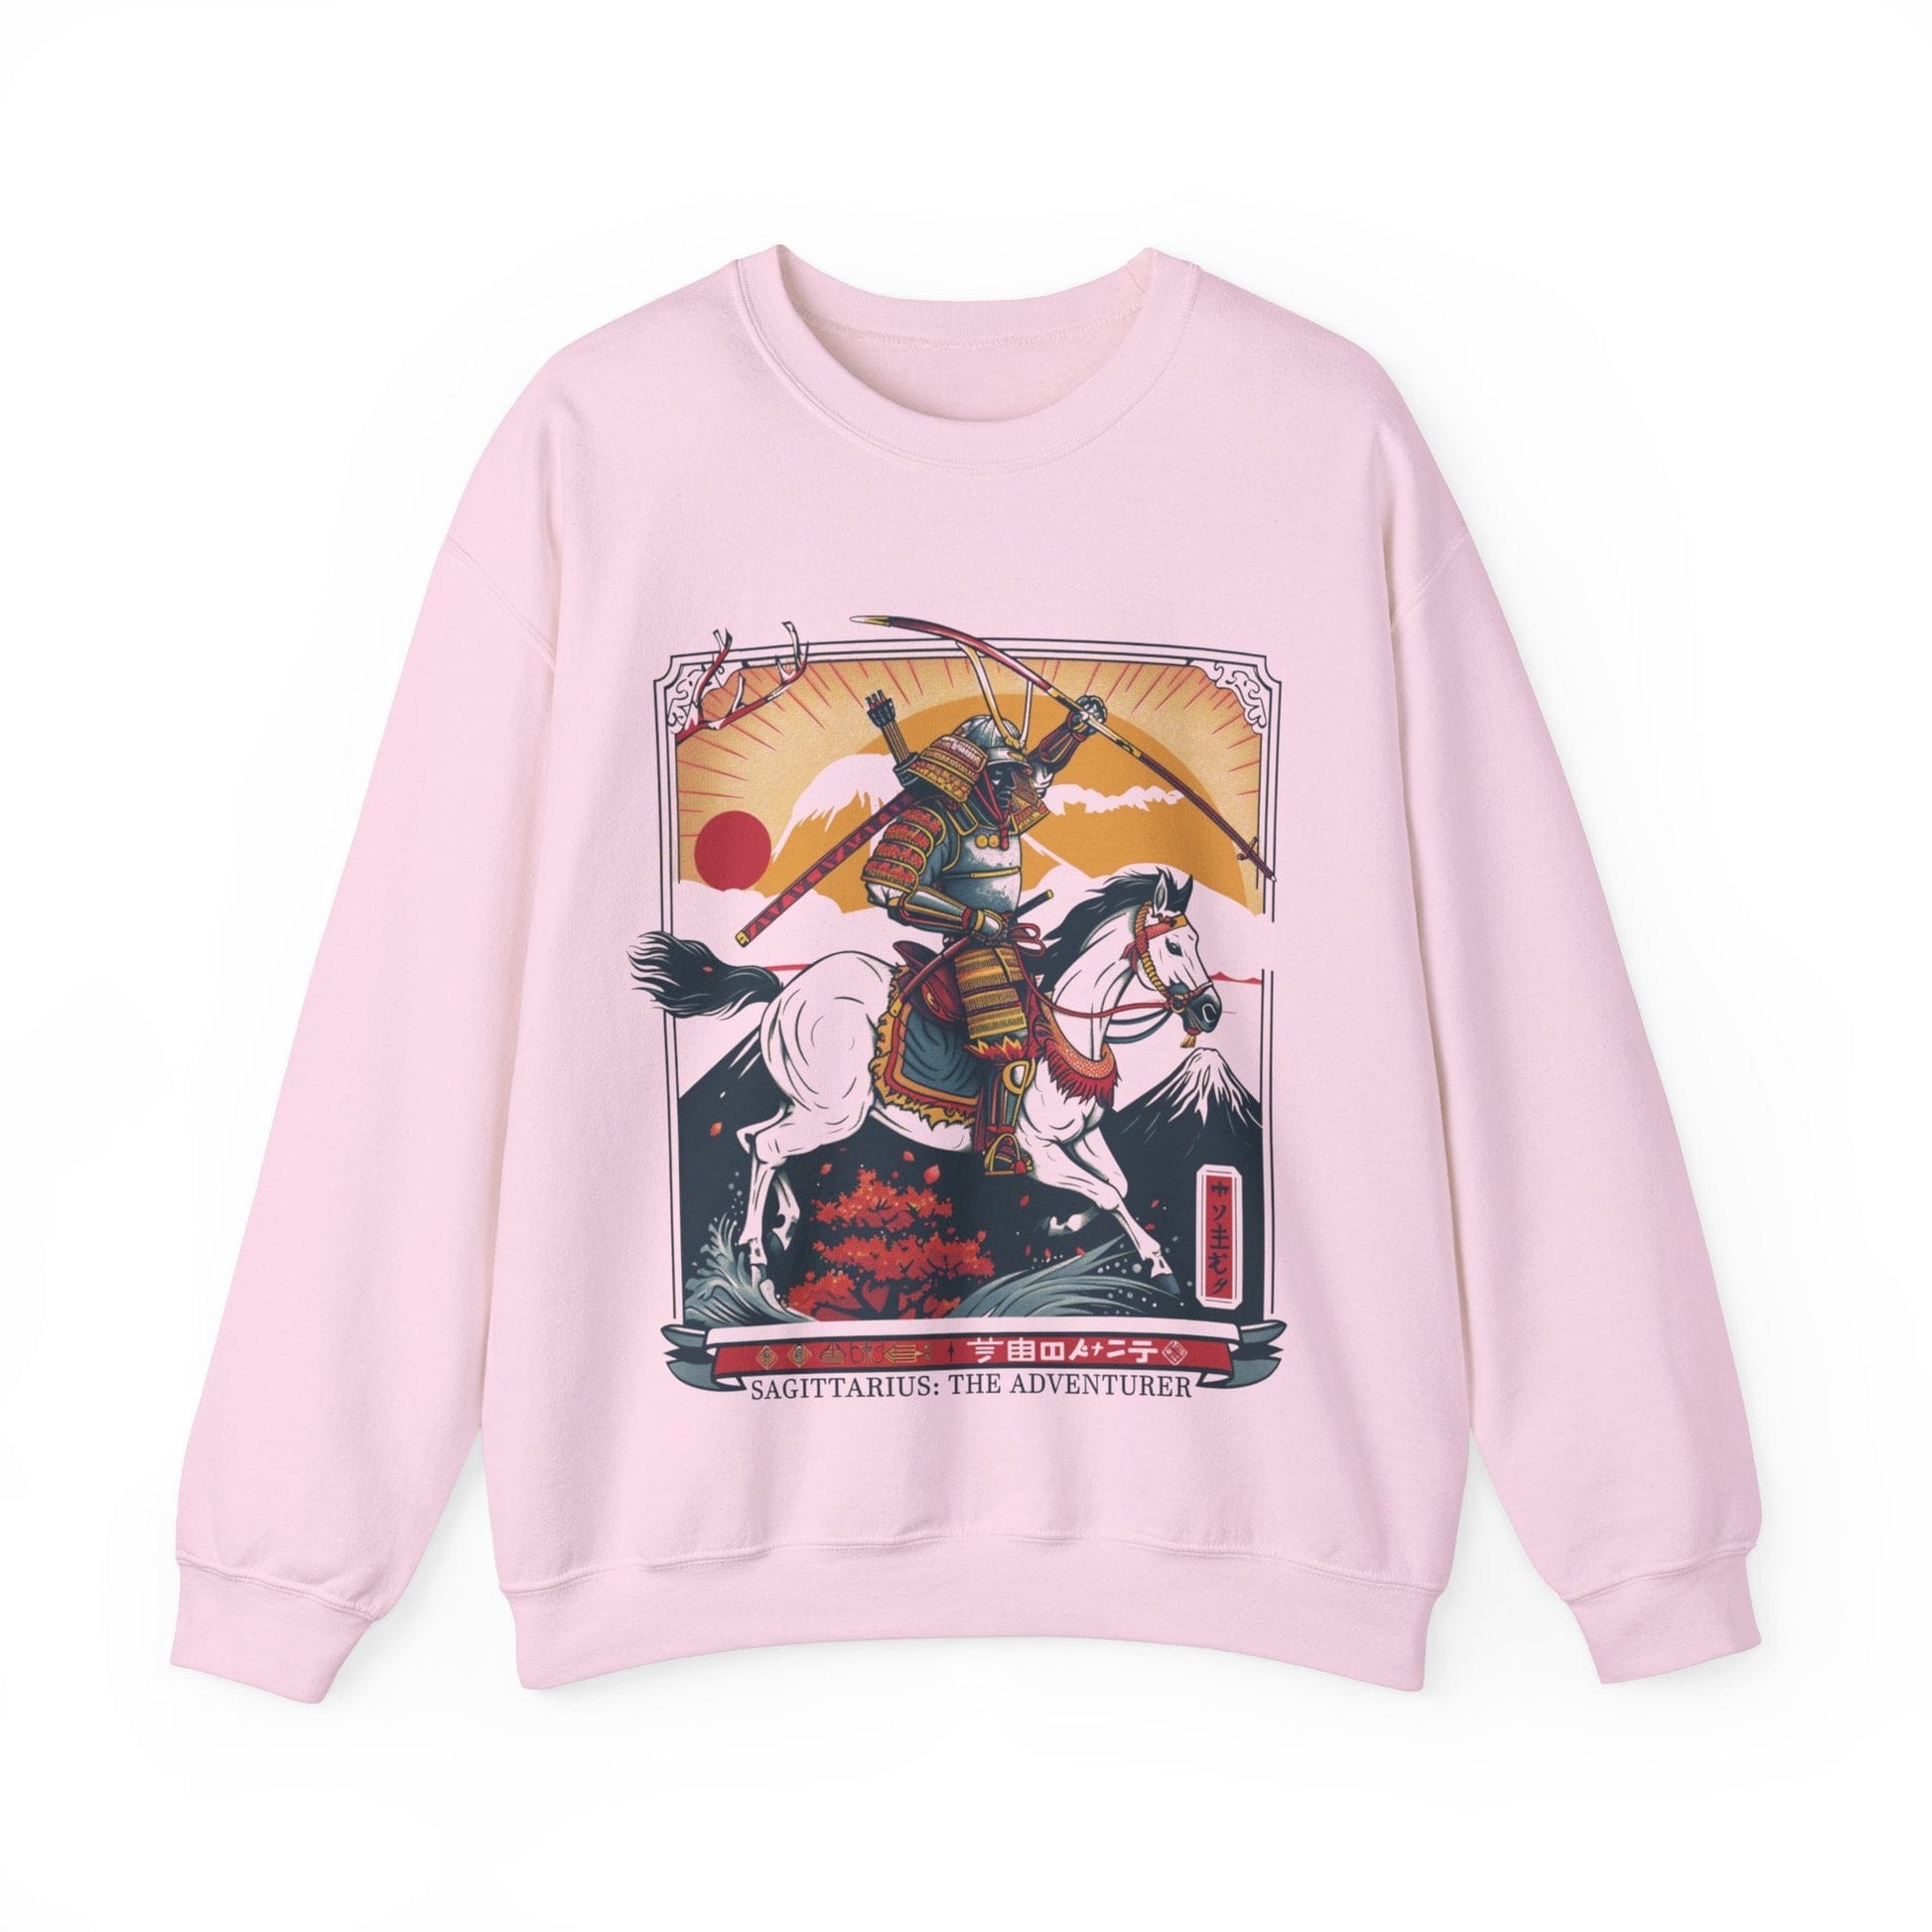 Sweatshirt S / Light Pink Shogun Quest Sagittarius Sweater: The Warrior's Path